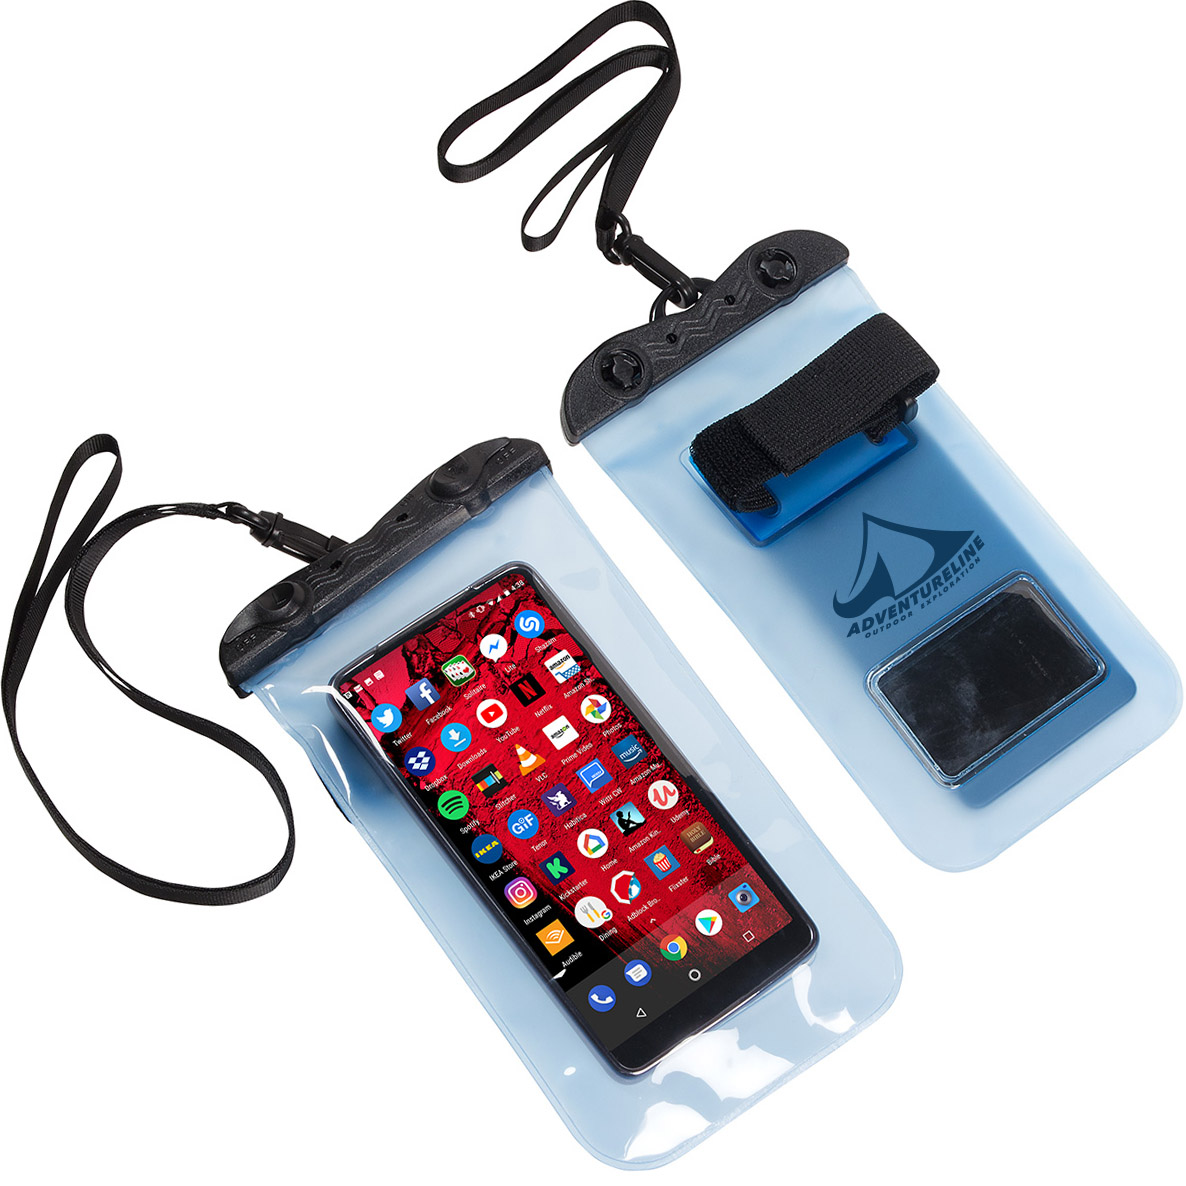 Dridock Pouch NEW 100% Waterproof to 10m 1023 MIRAGE Waterproof Phone Pack 